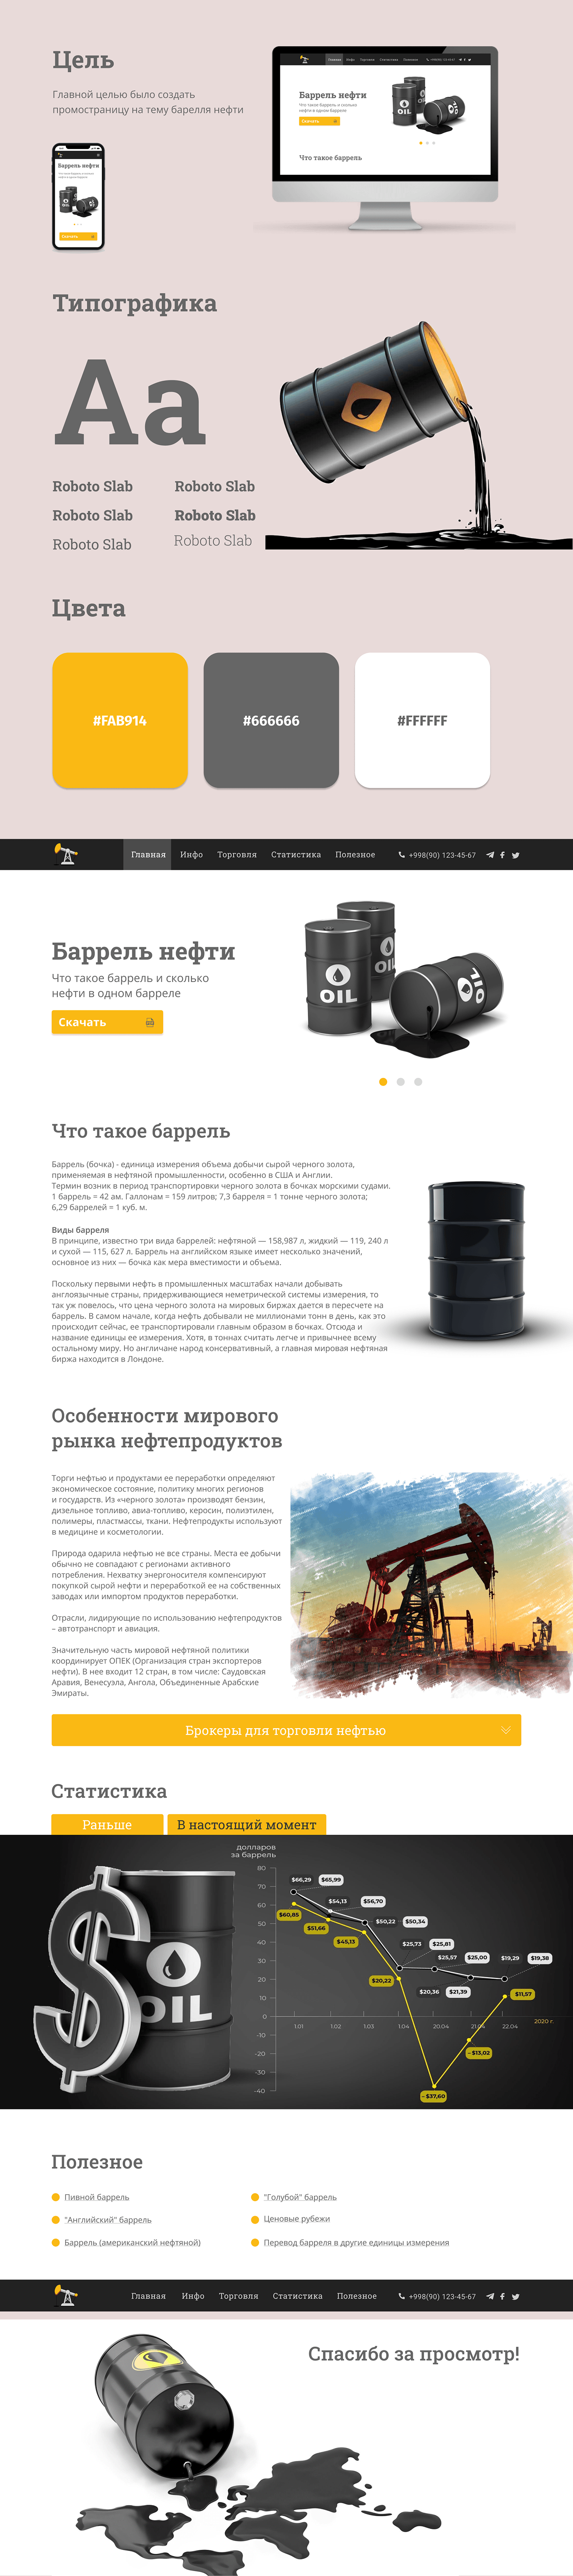 Barrel of oil promo page UX UI DESign